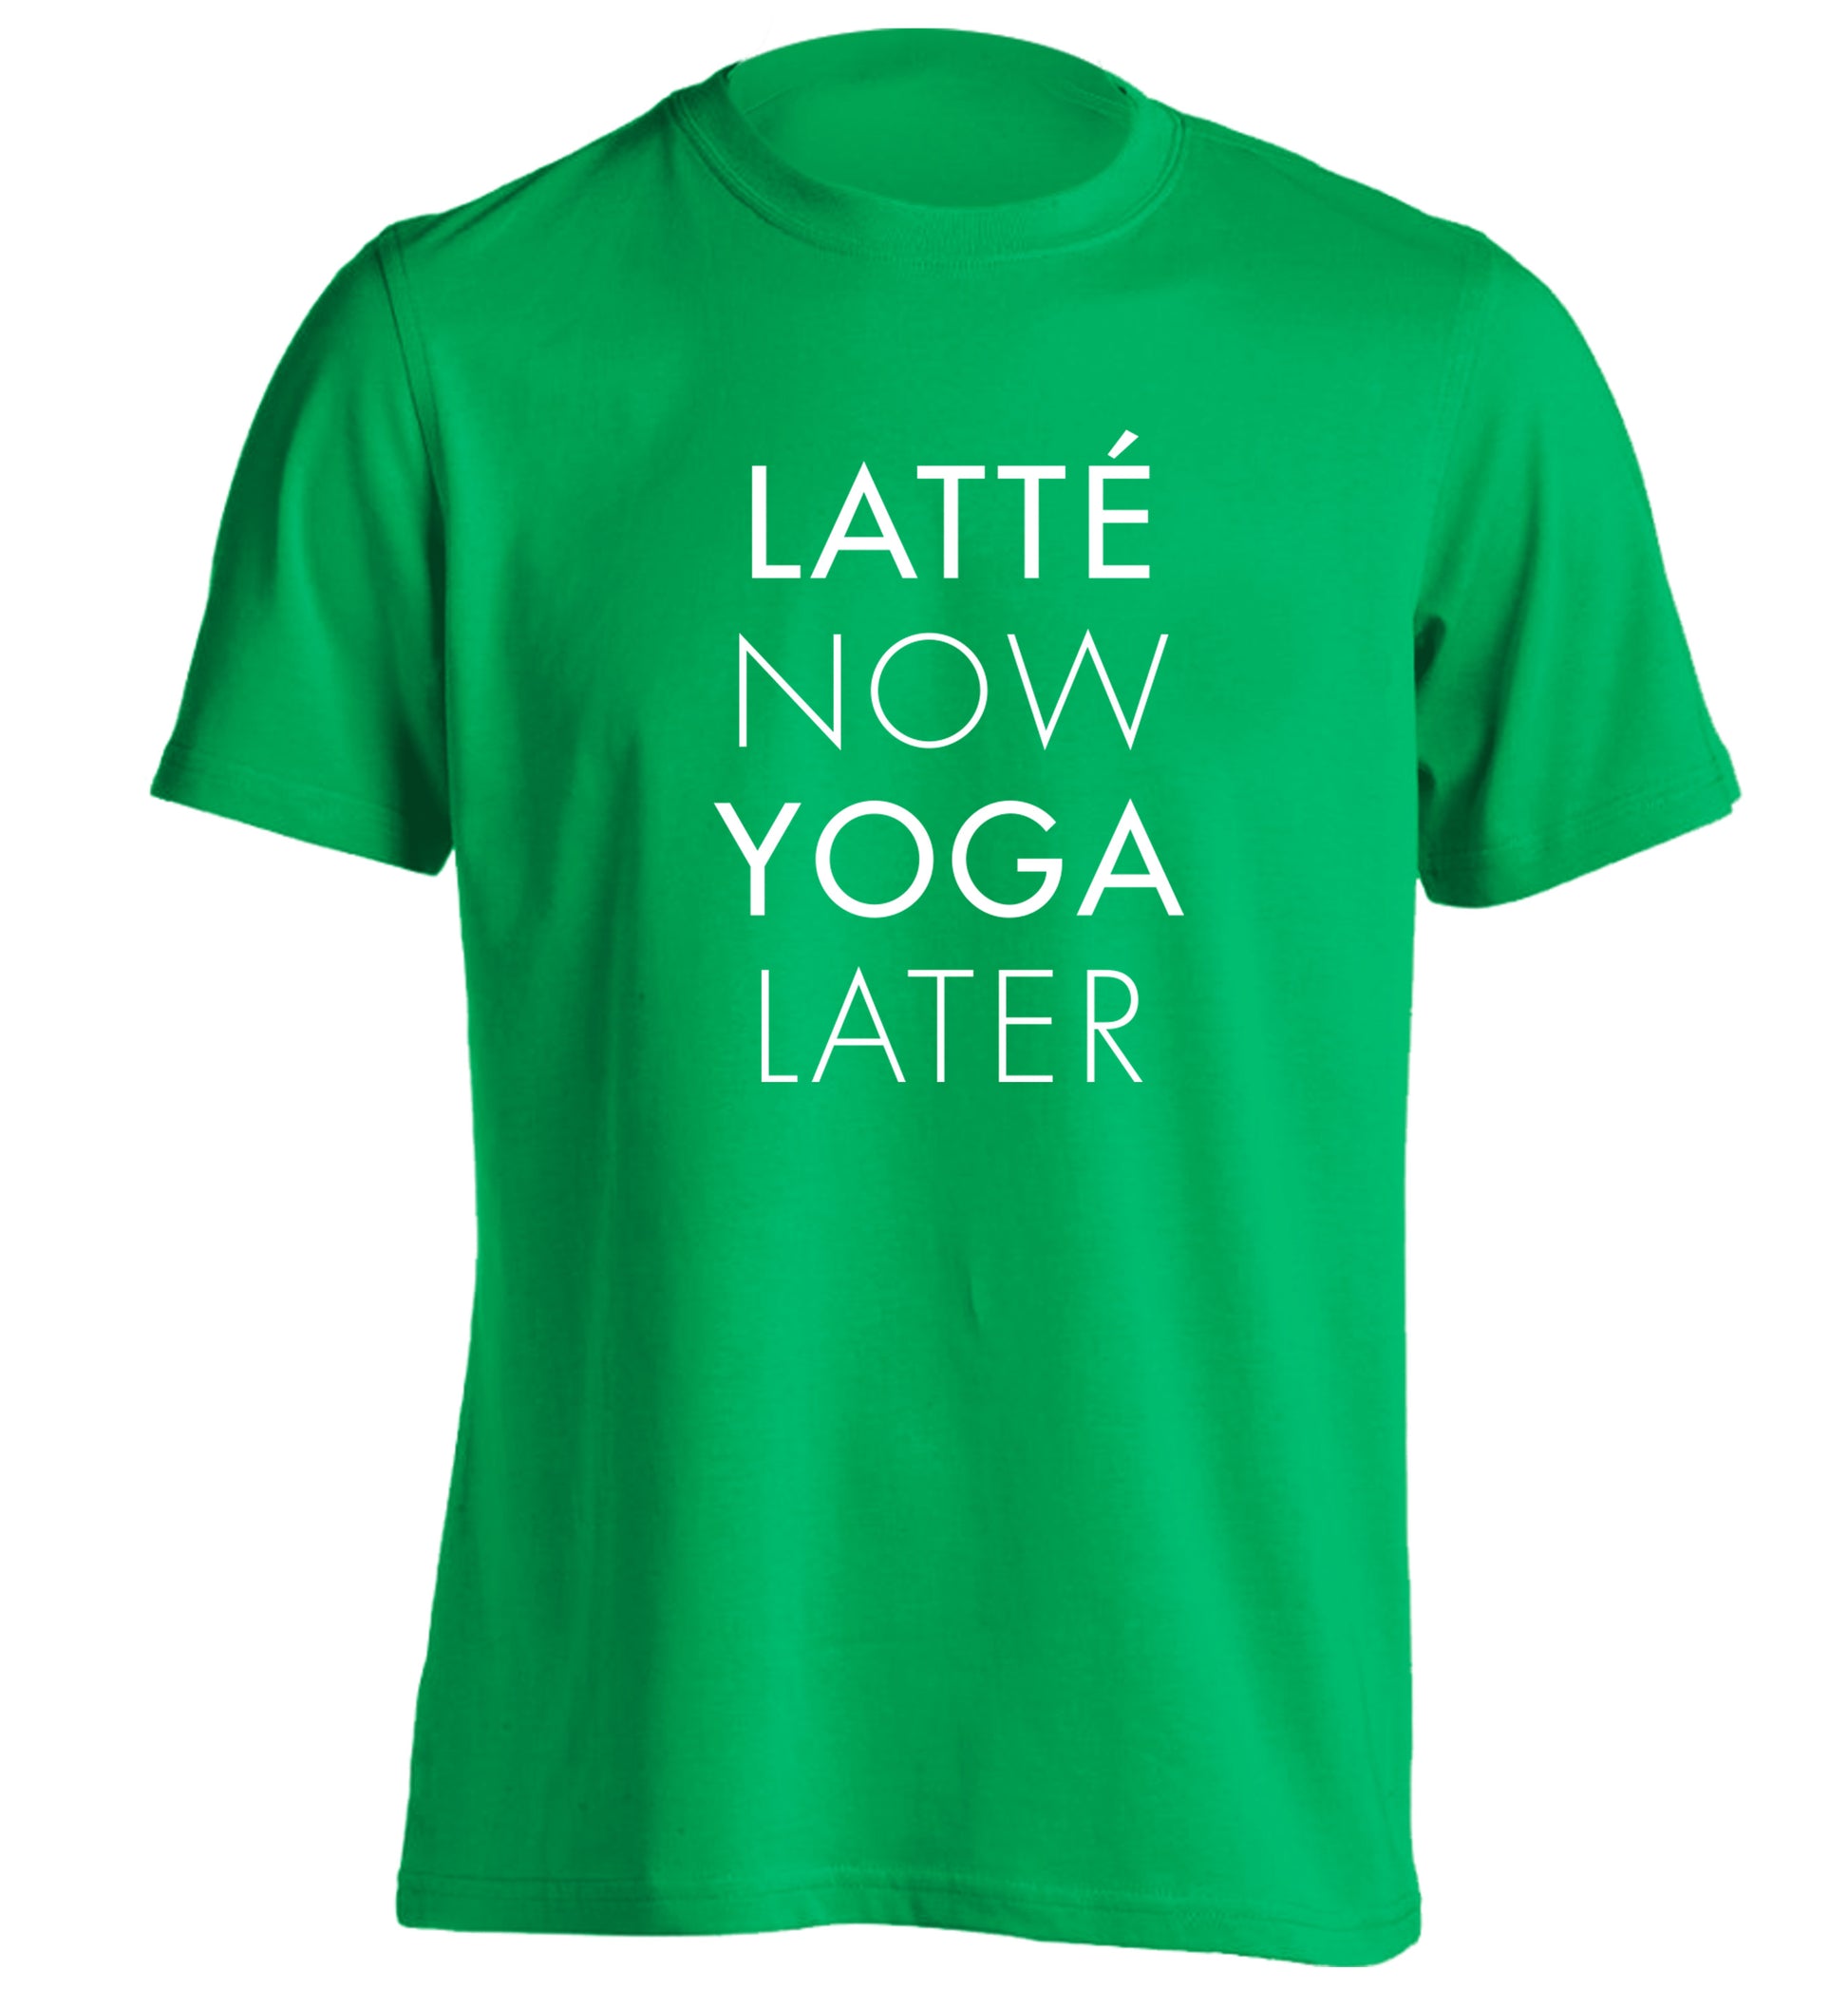 Latte now yoga later adults unisex green Tshirt 2XL